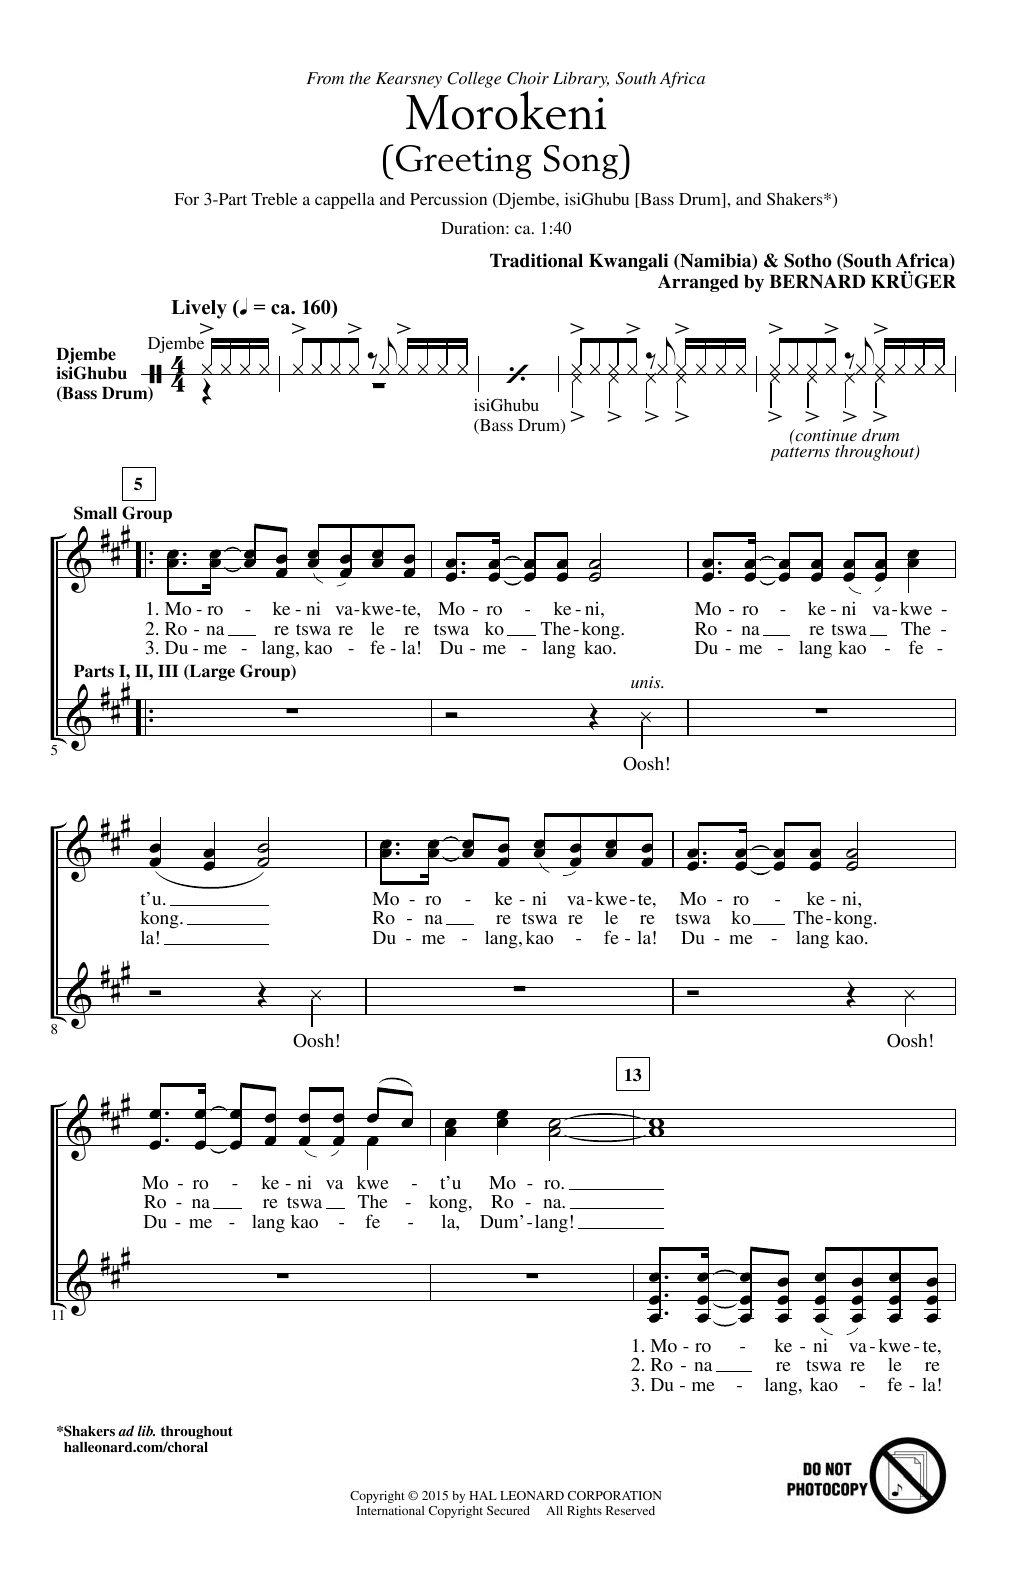 Bernard Krüger Morokeni (Welcome Song) Sheet Music Notes & Chords for SATB - Download or Print PDF